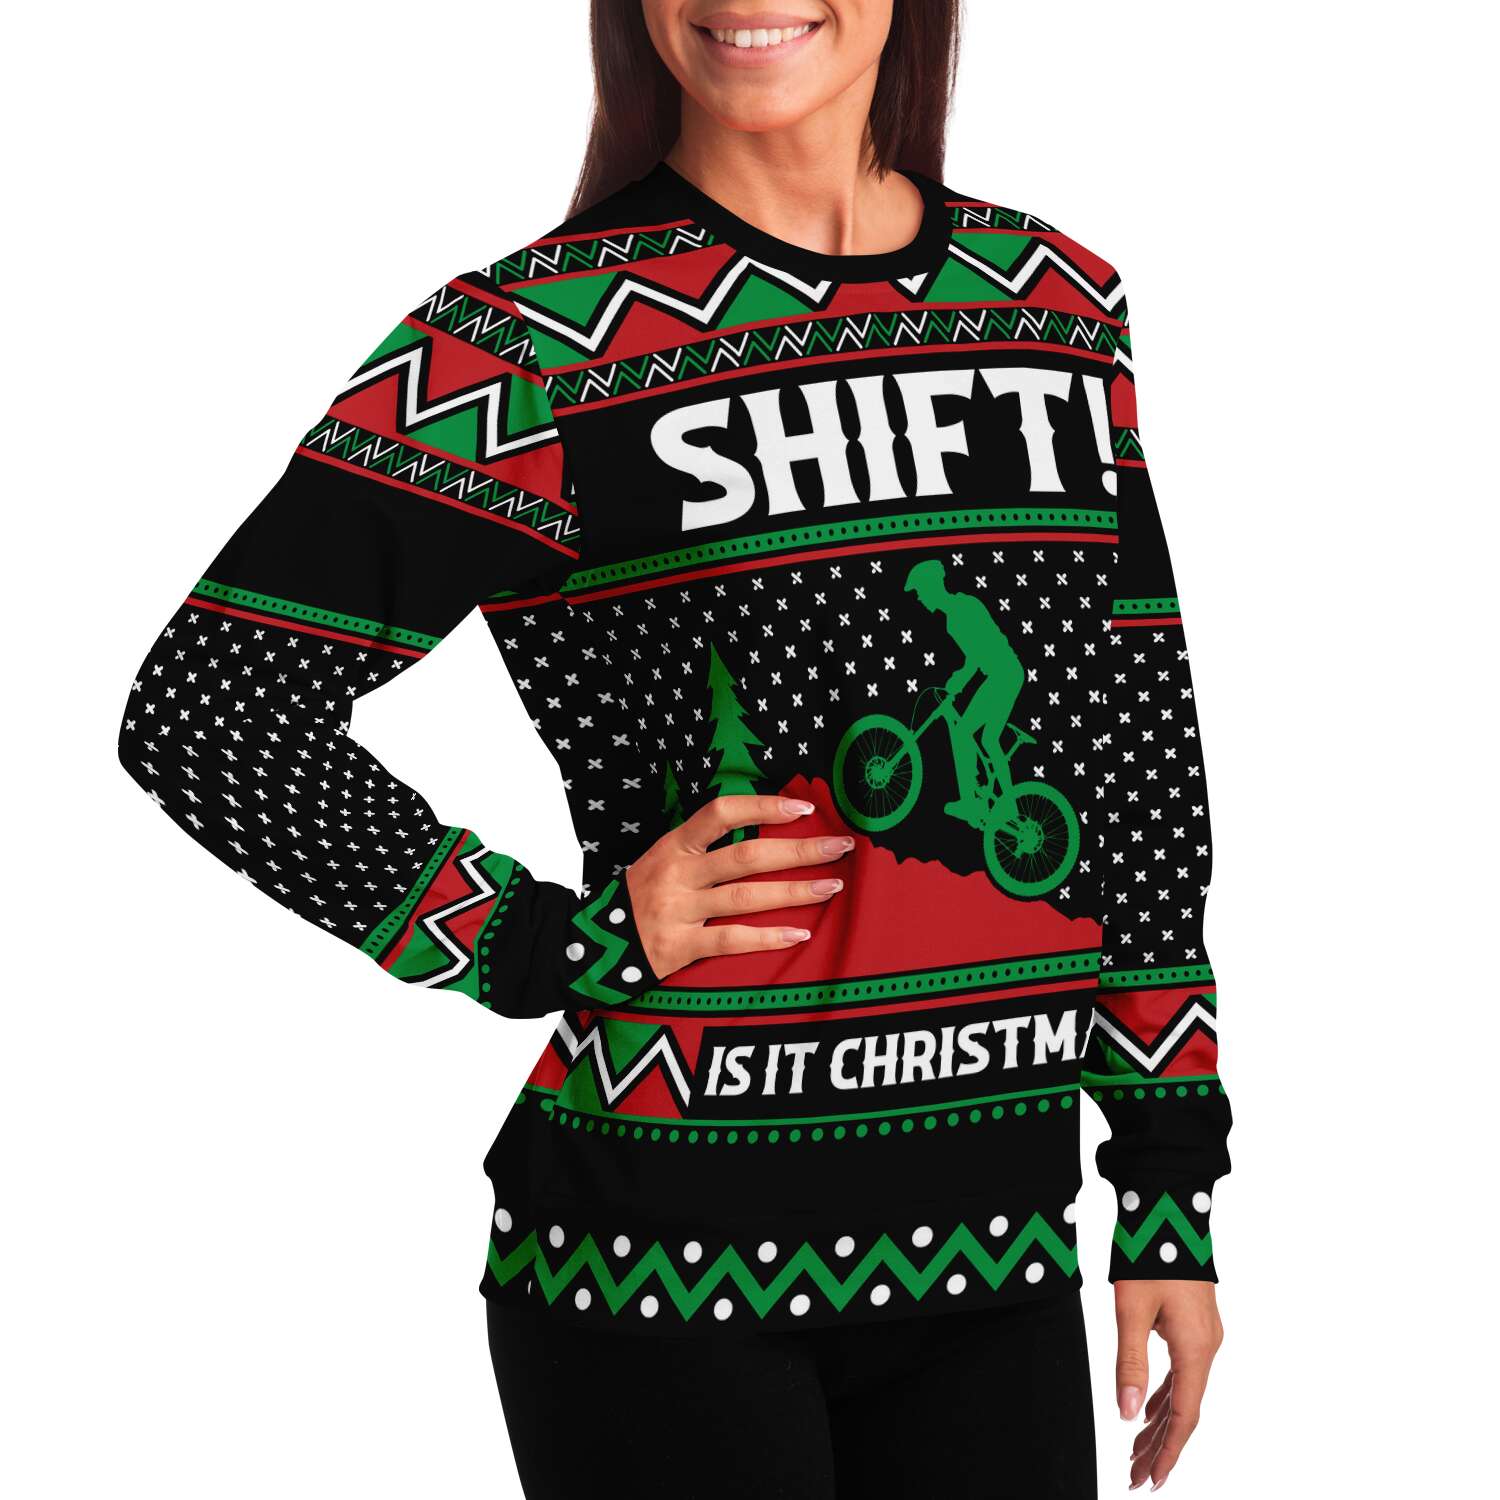 Shift It's Christmas